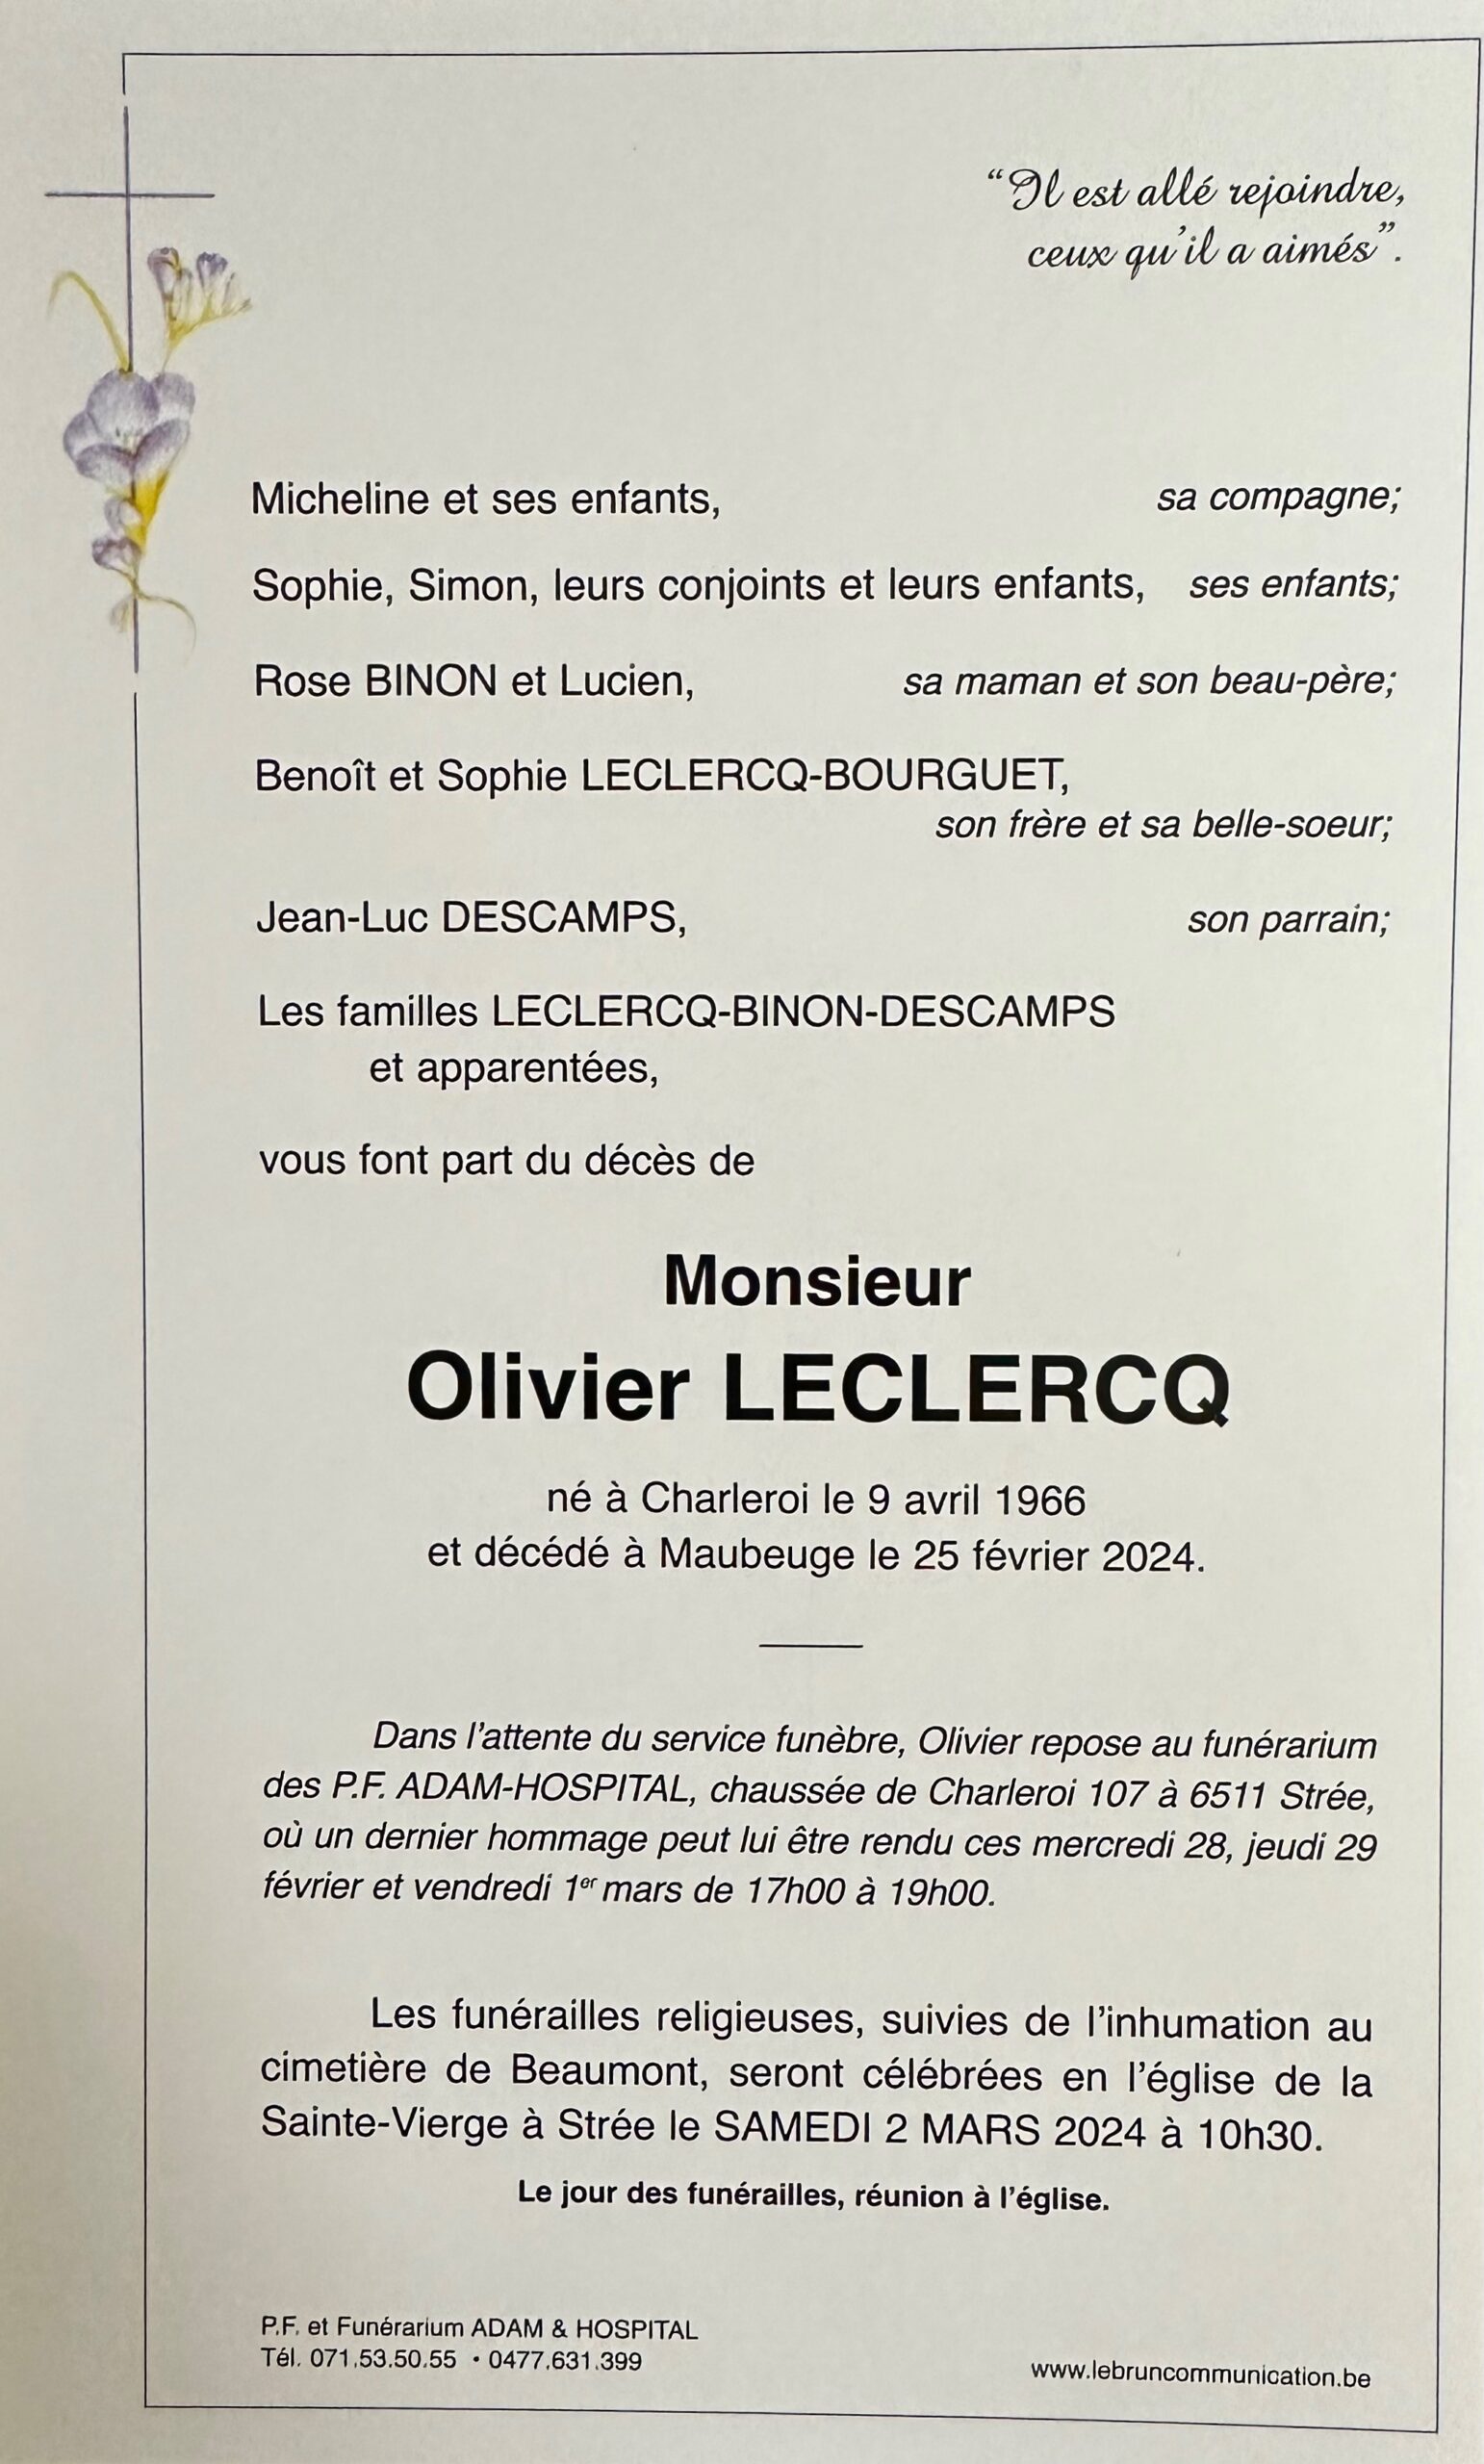 Olivier LECLERCQ scaled | Funérailles Adam Hospital